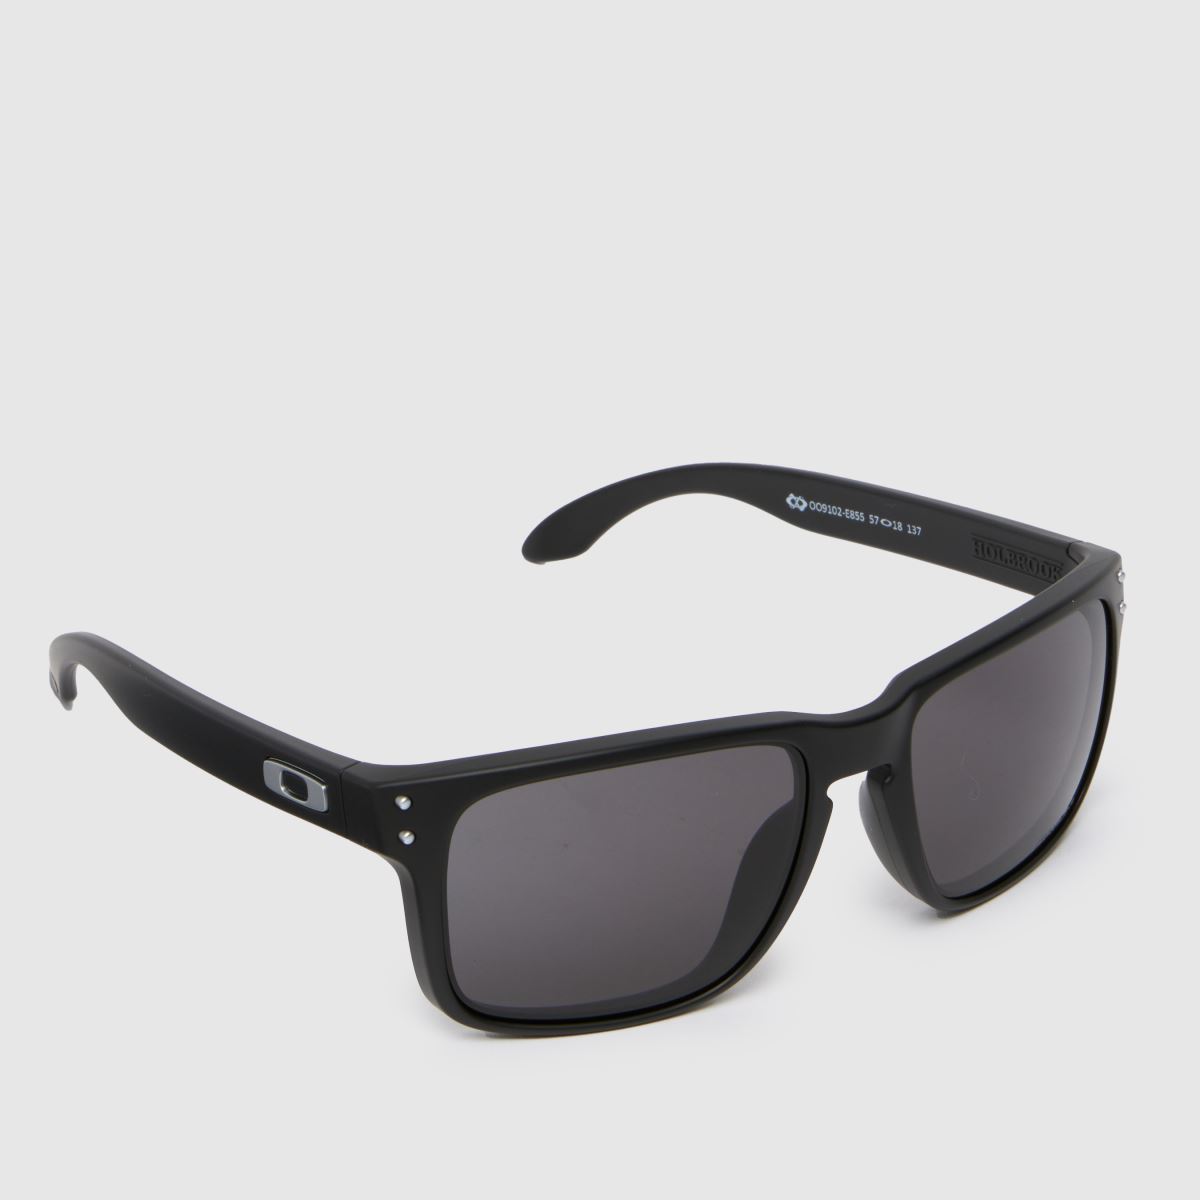 Oakley black holbrook sunglasses